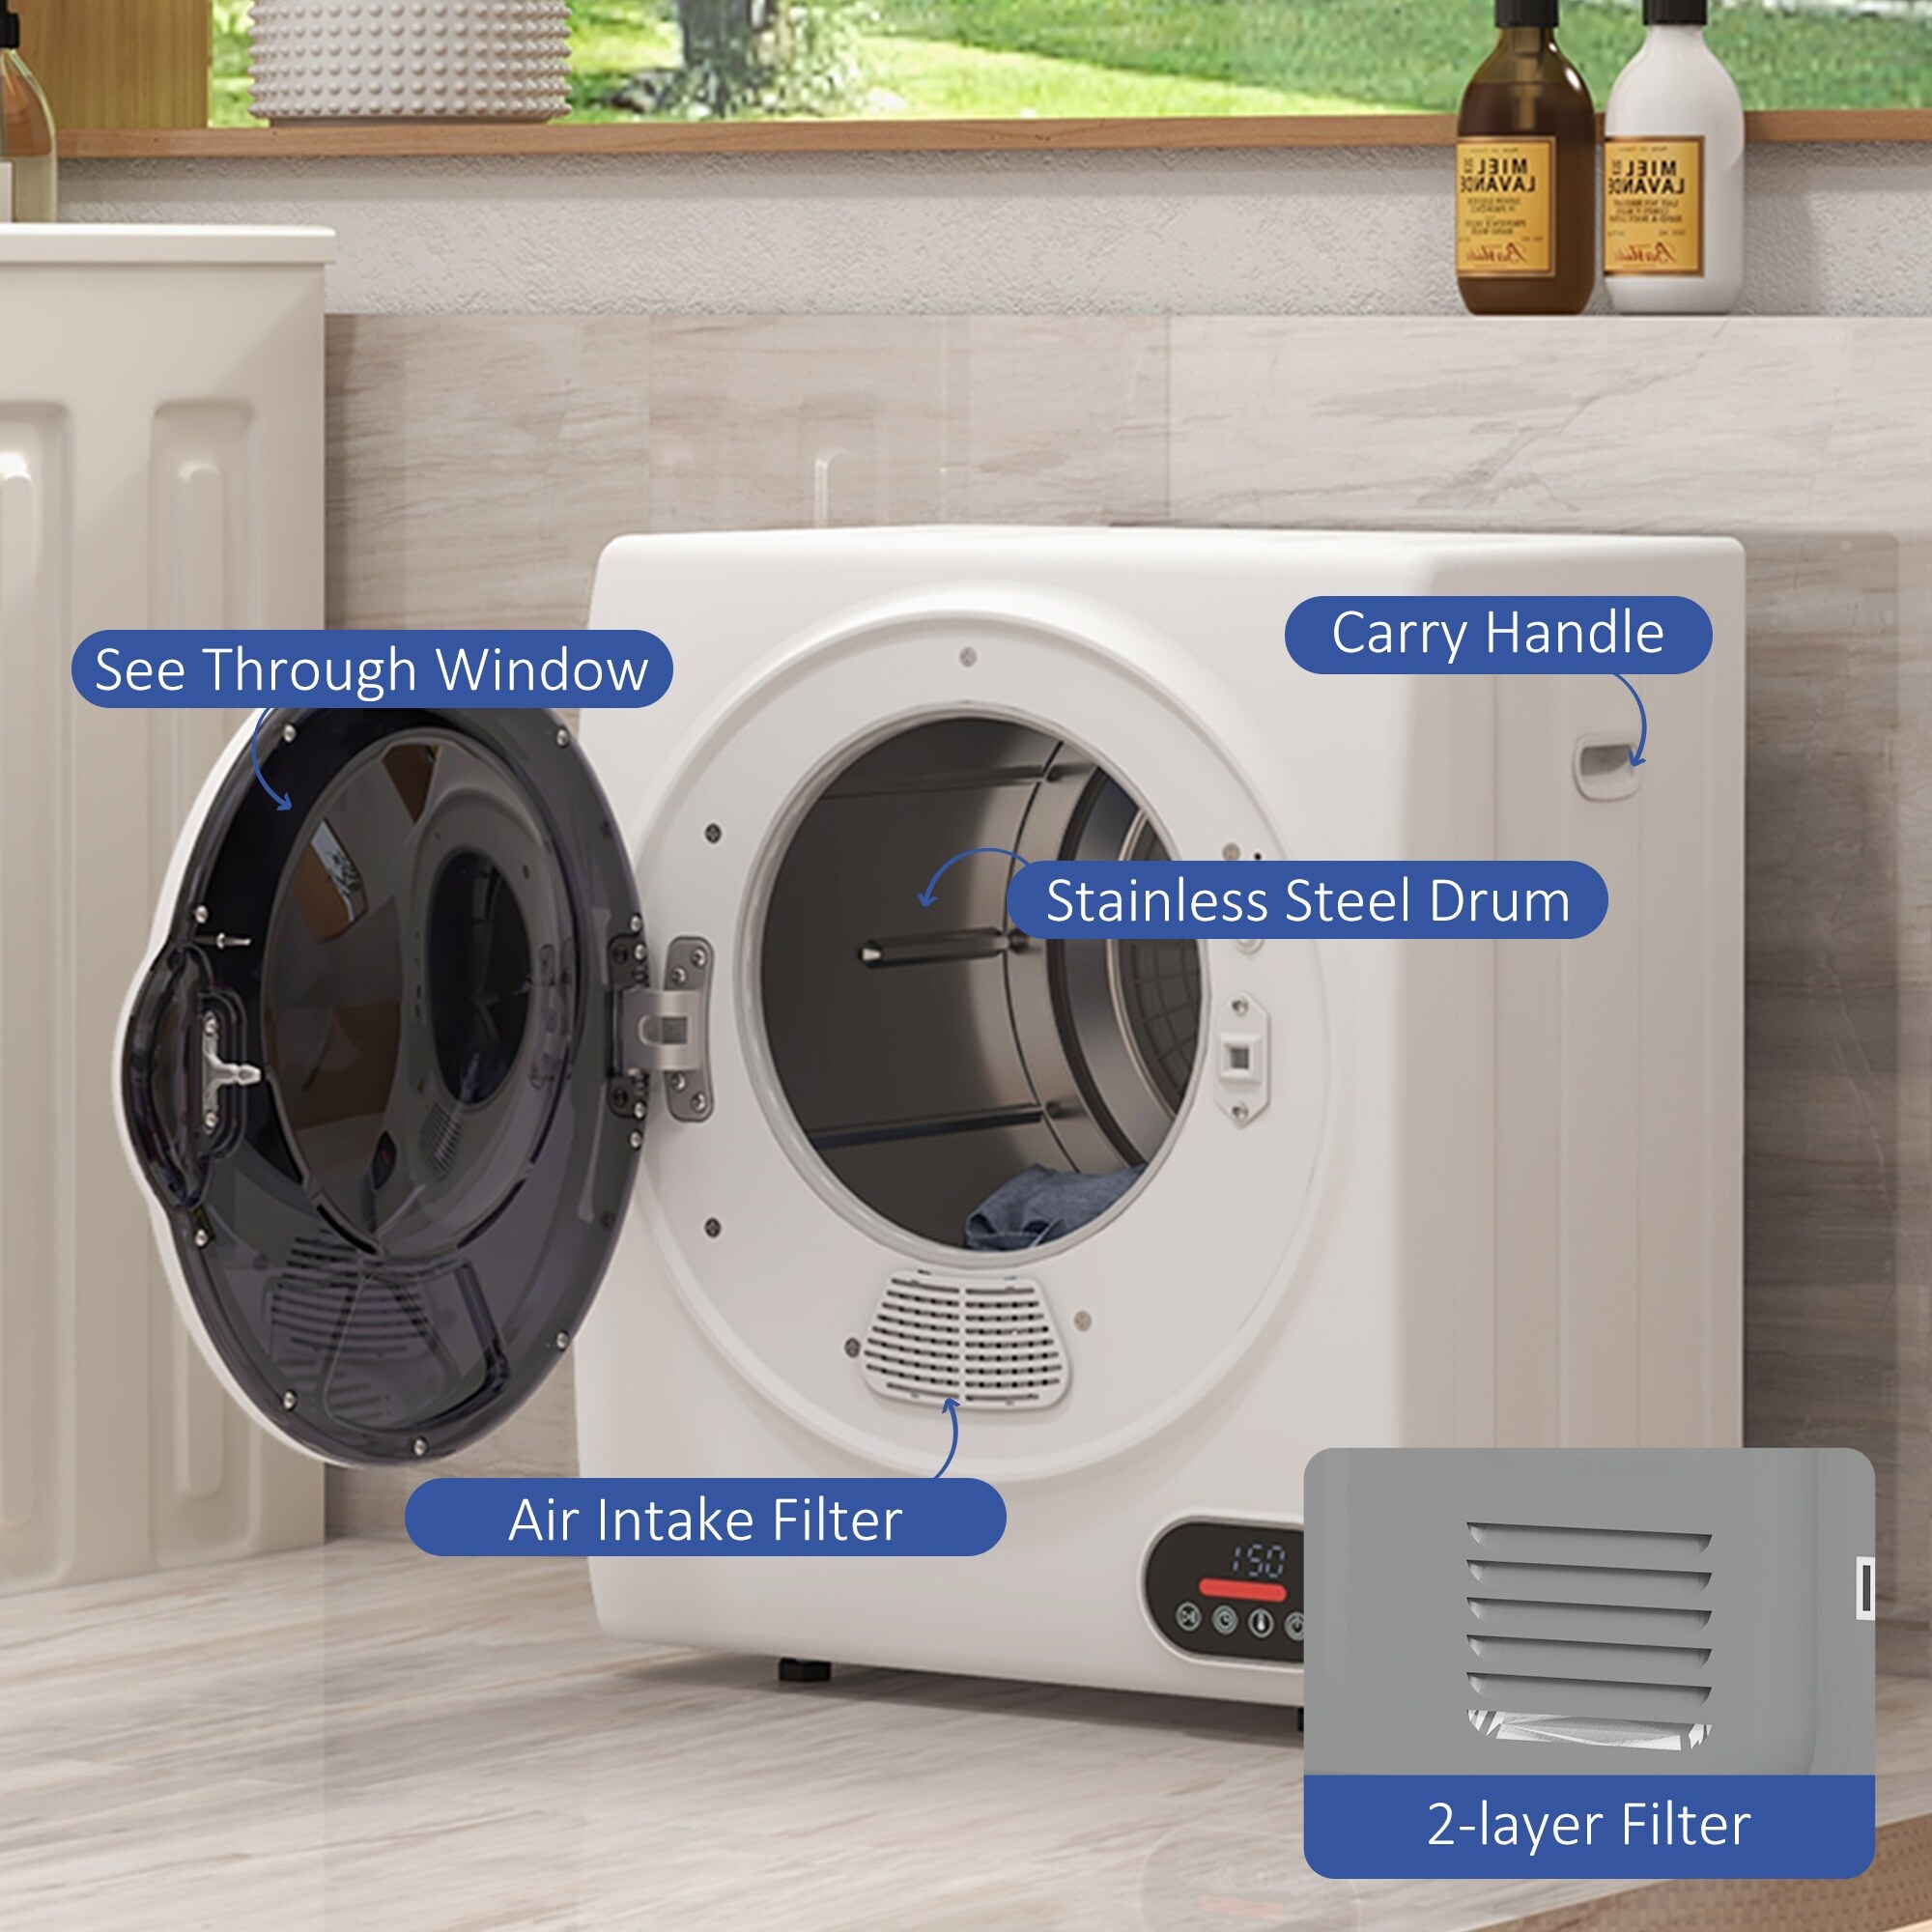 HOMCOM Automatic Dryer Machine, 850W 1.5 Cu.Ft. Portable Clothes Dryer, White